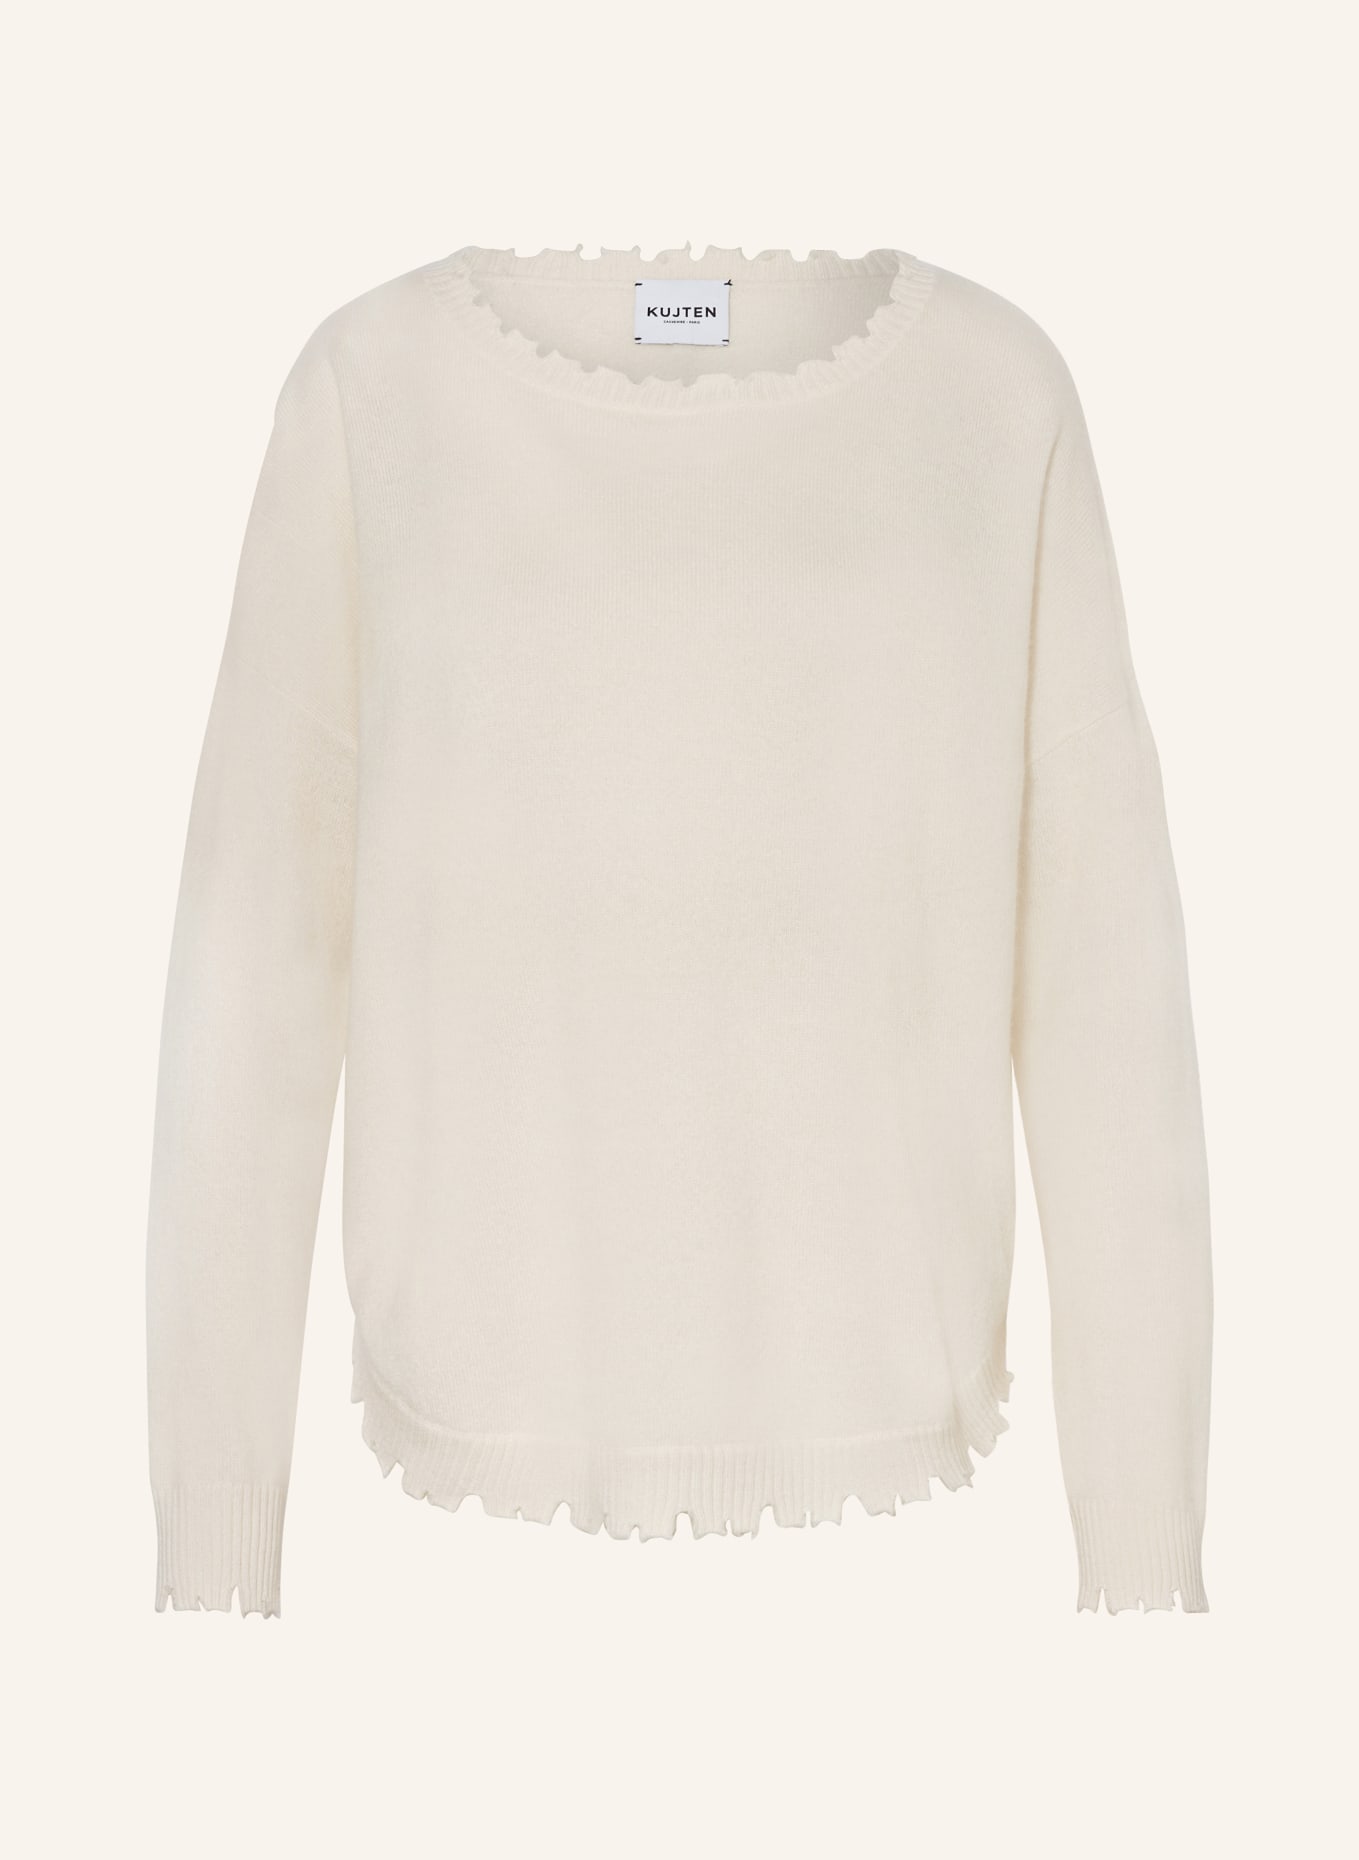 KUJTEN Cashmere-Pullover MELAH, Farbe: ECRU (Bild 1)